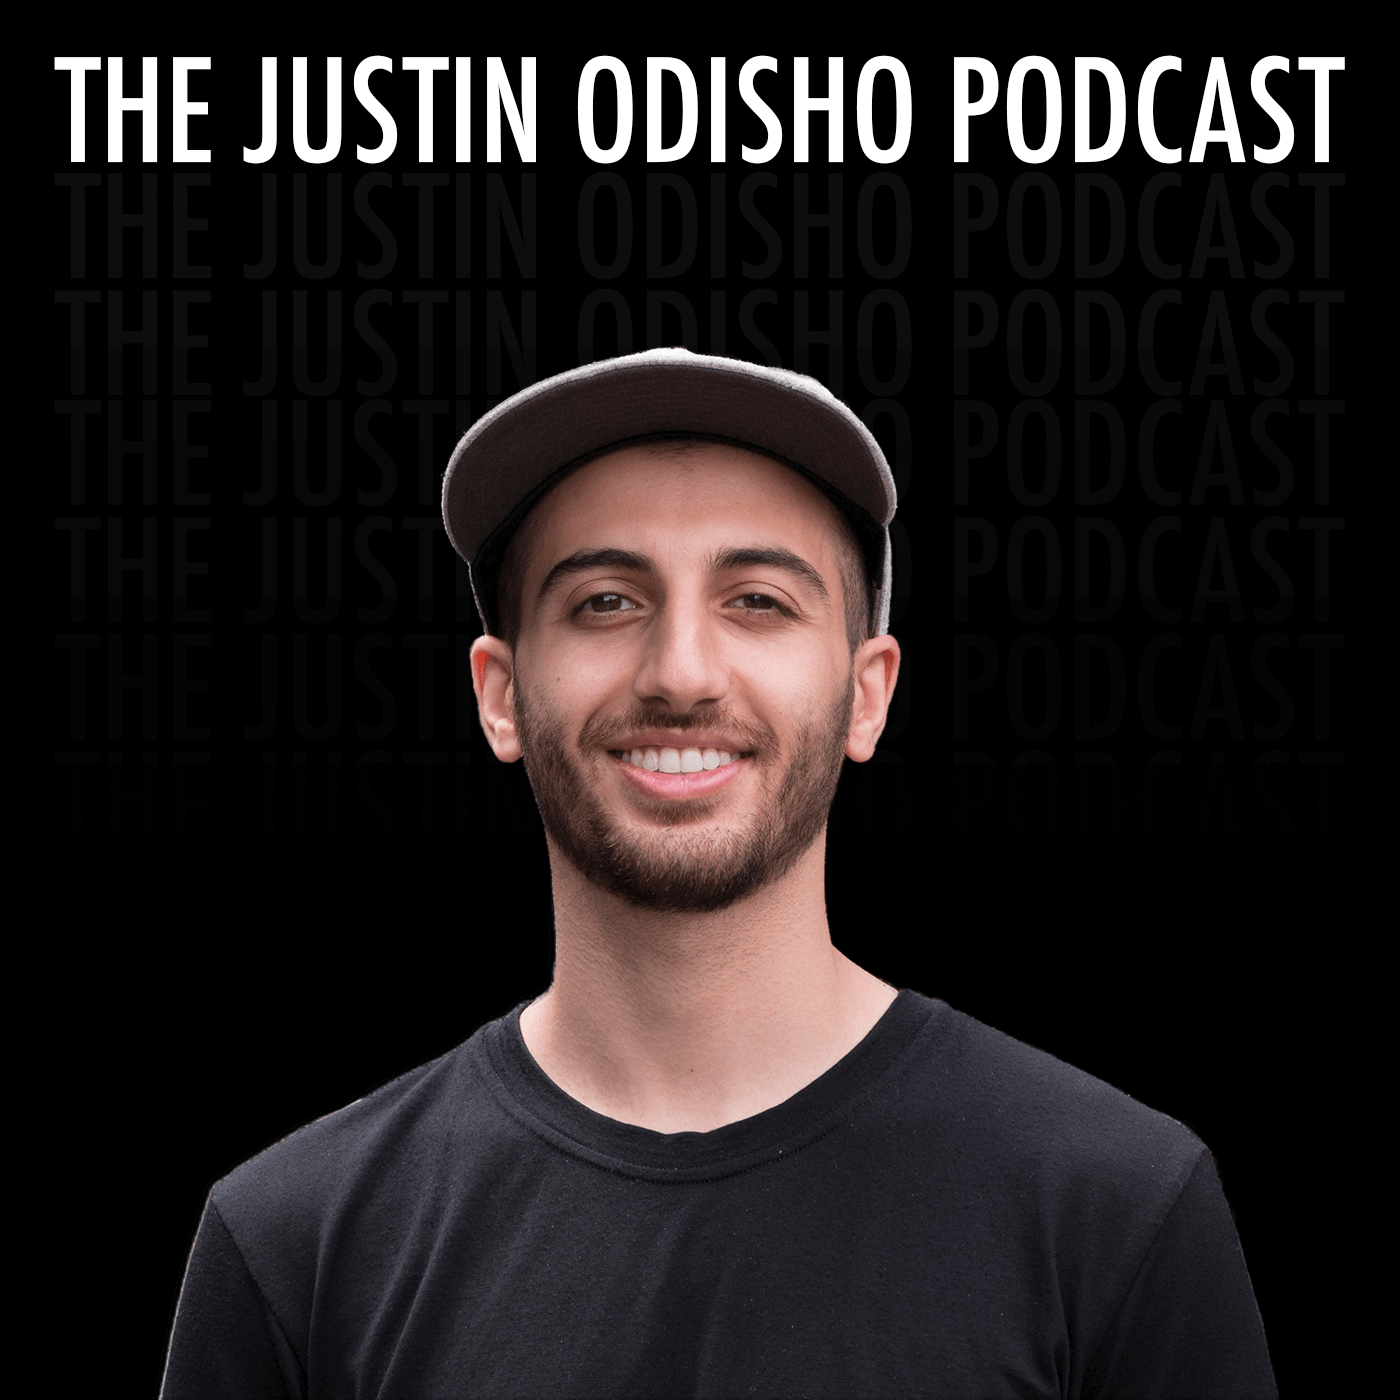 The Justin Odisho Podcast